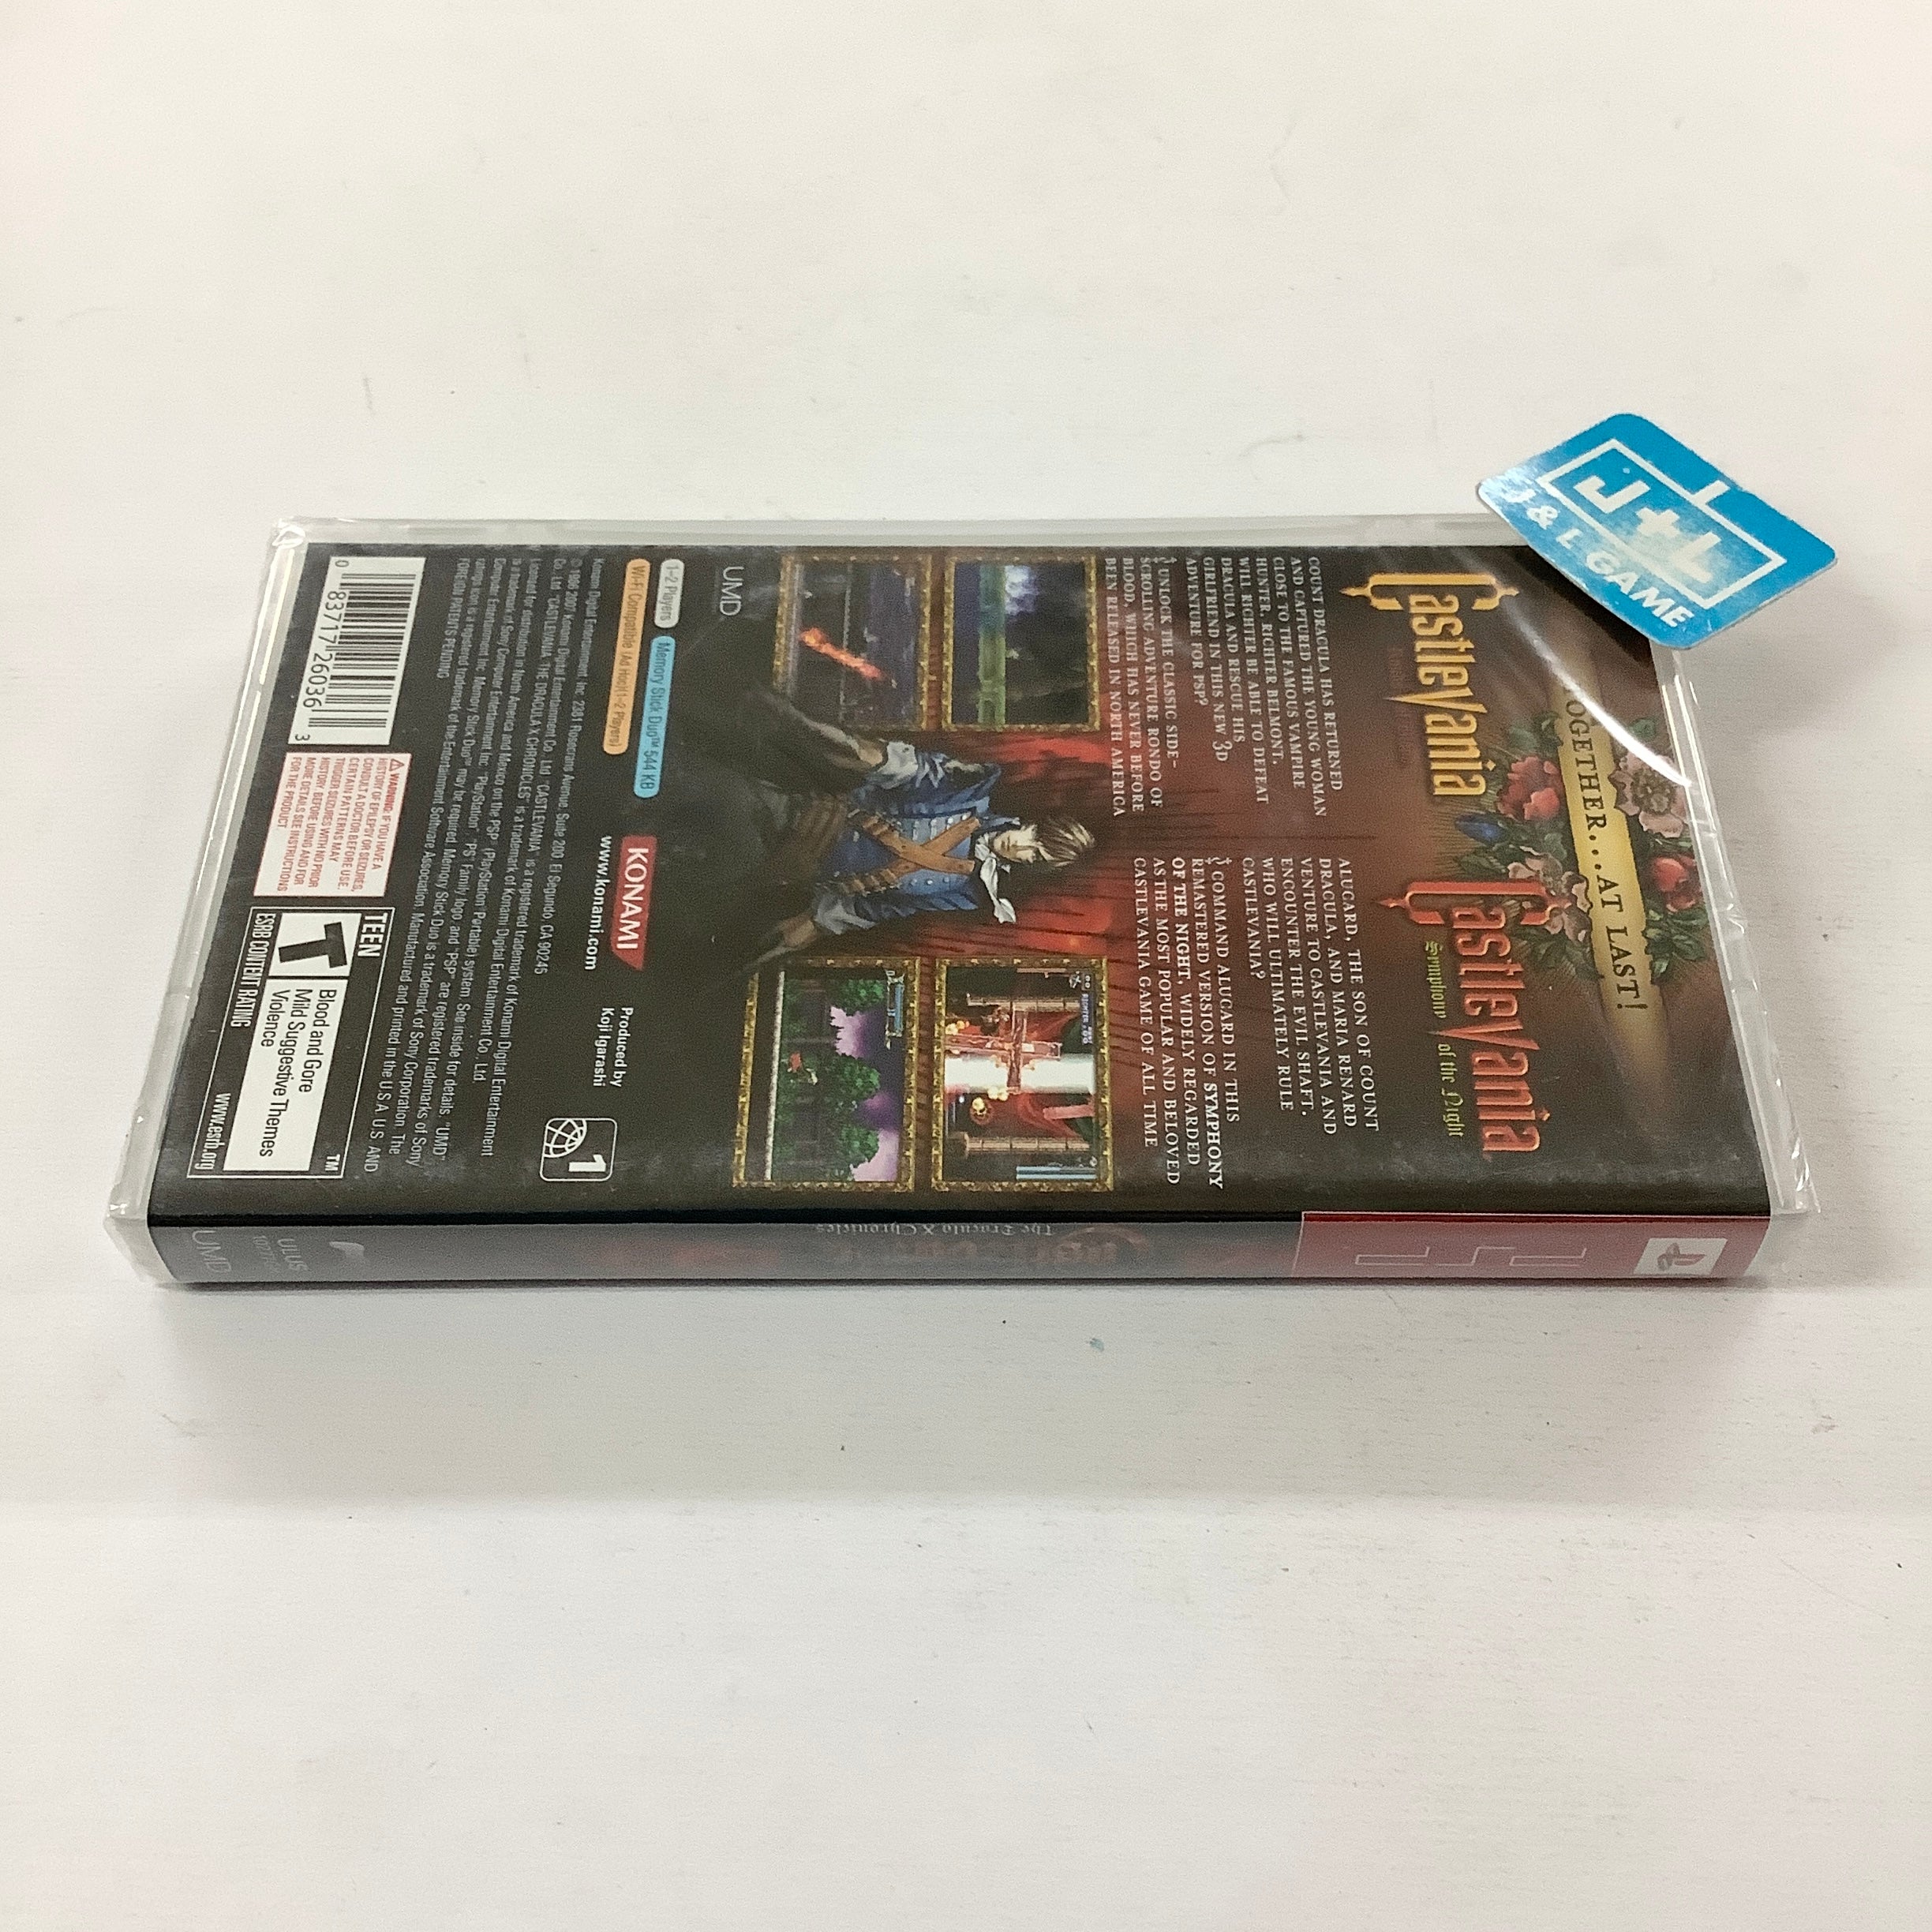 Castlevania: The Dracula X Chronicles (Greatest Hits) - SONY PSP Video Games Konami   